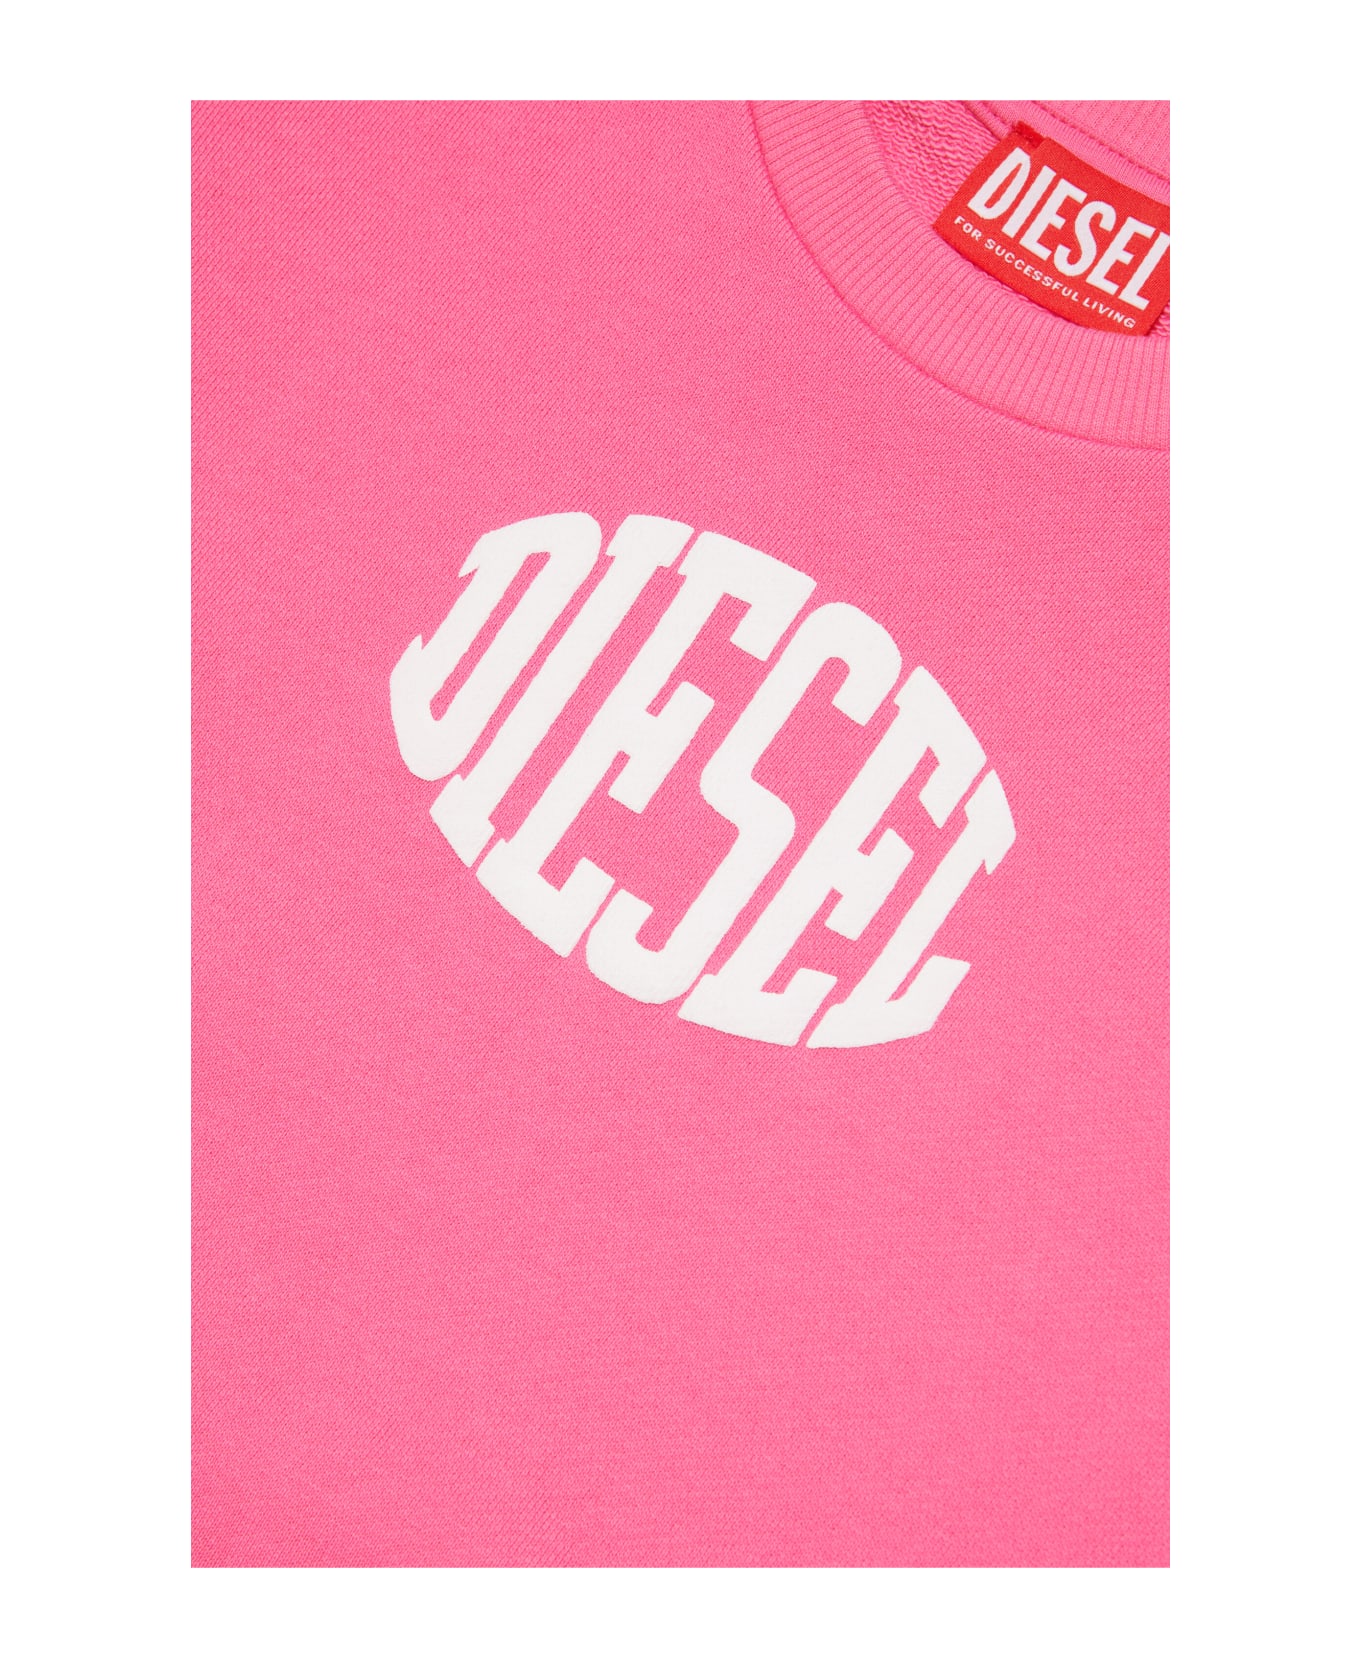 Diesel Siwi Sweat-shirt Diesel Crew-neck Sweatshirt With Puffy Print